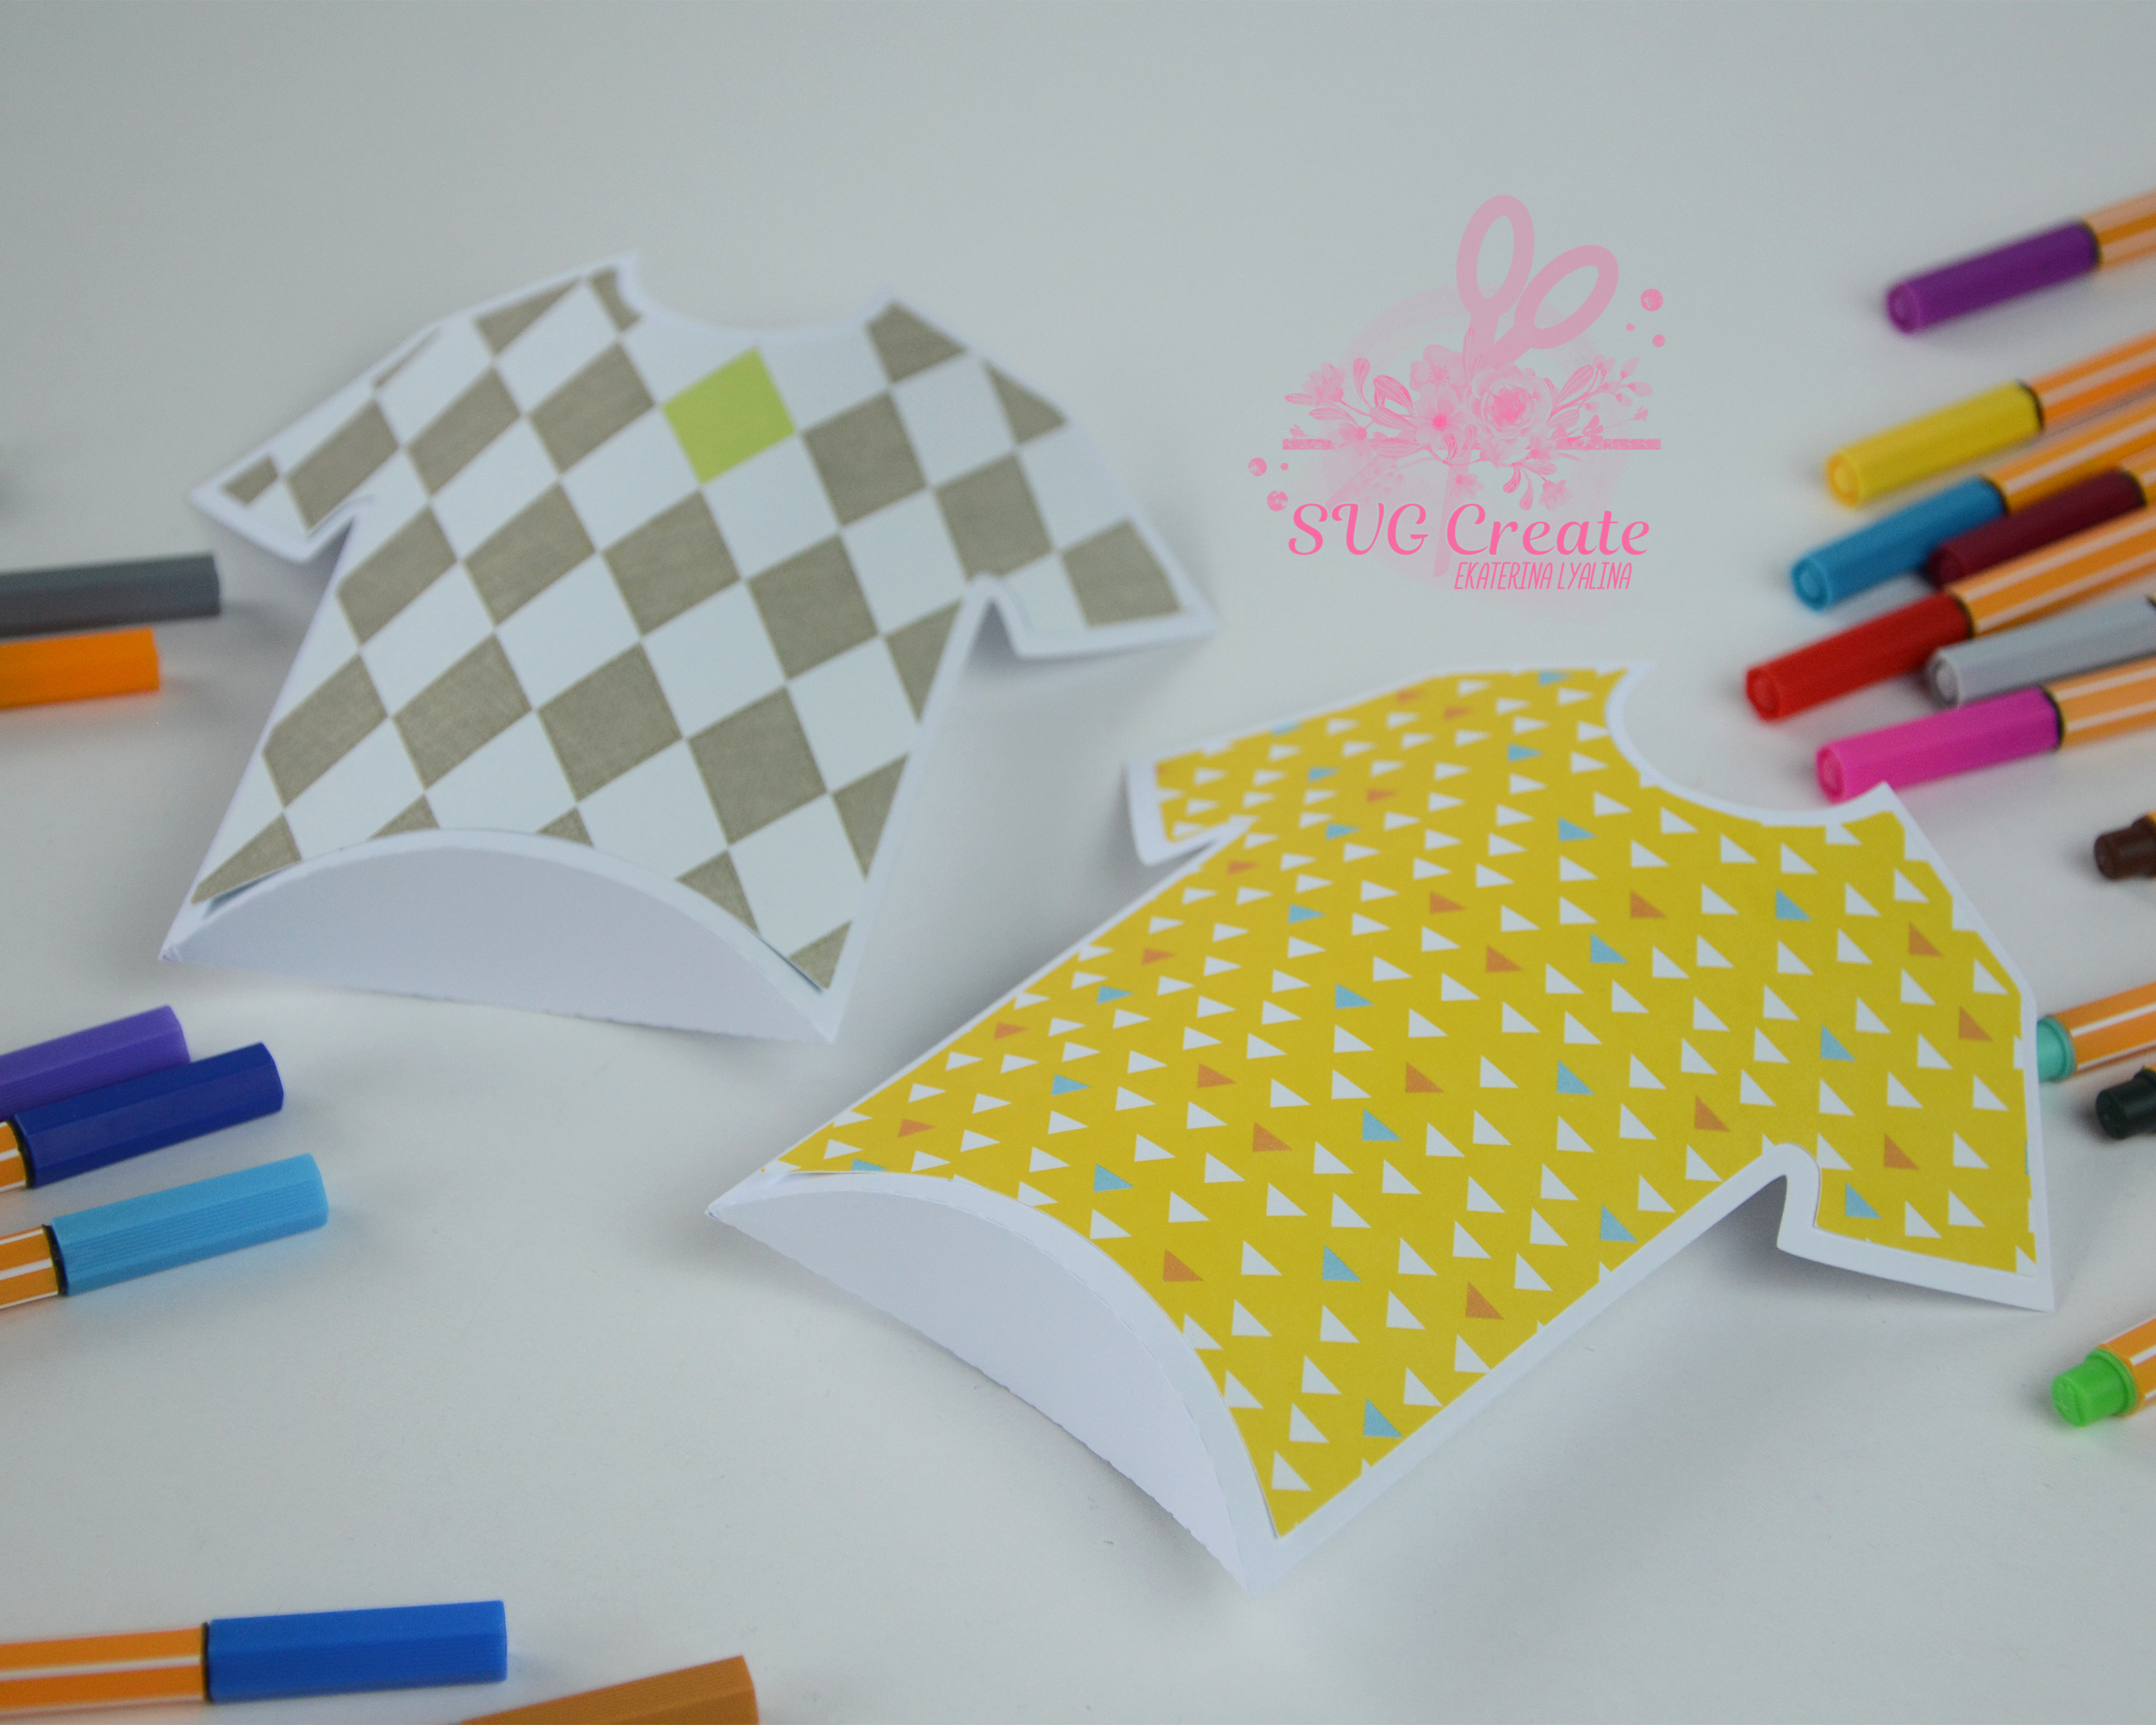 Download Pillow T-shirt box template gift file favor papercut svg diy (178909) | Scrapbooking | Design ...